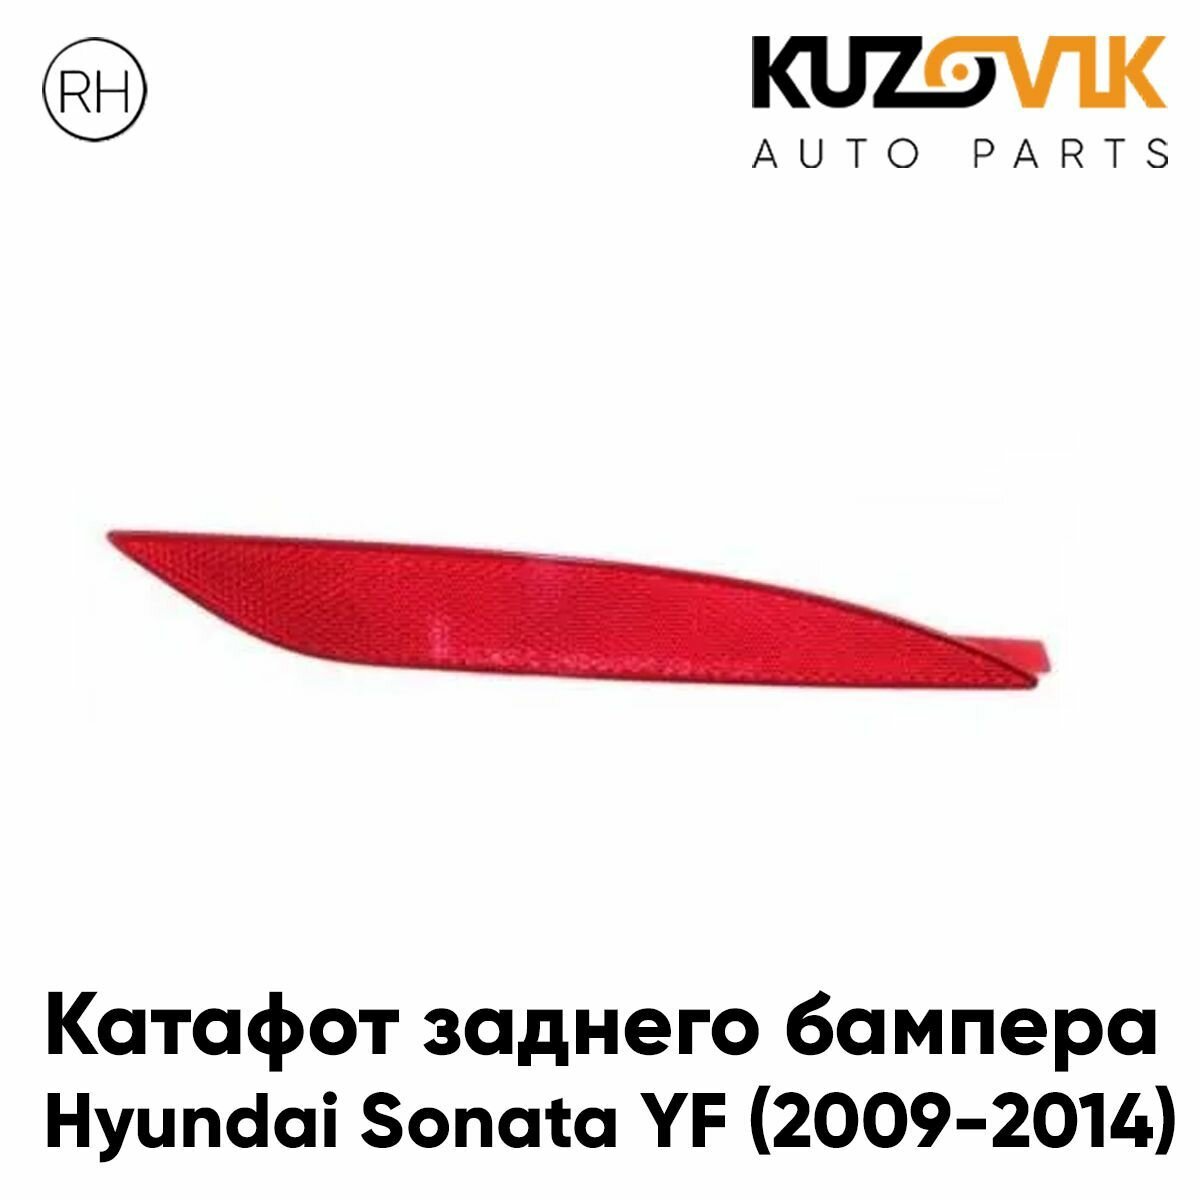 Фонарь-катафот правый в задний бампер Hyundai Sonata YF 6 (2010-2014)